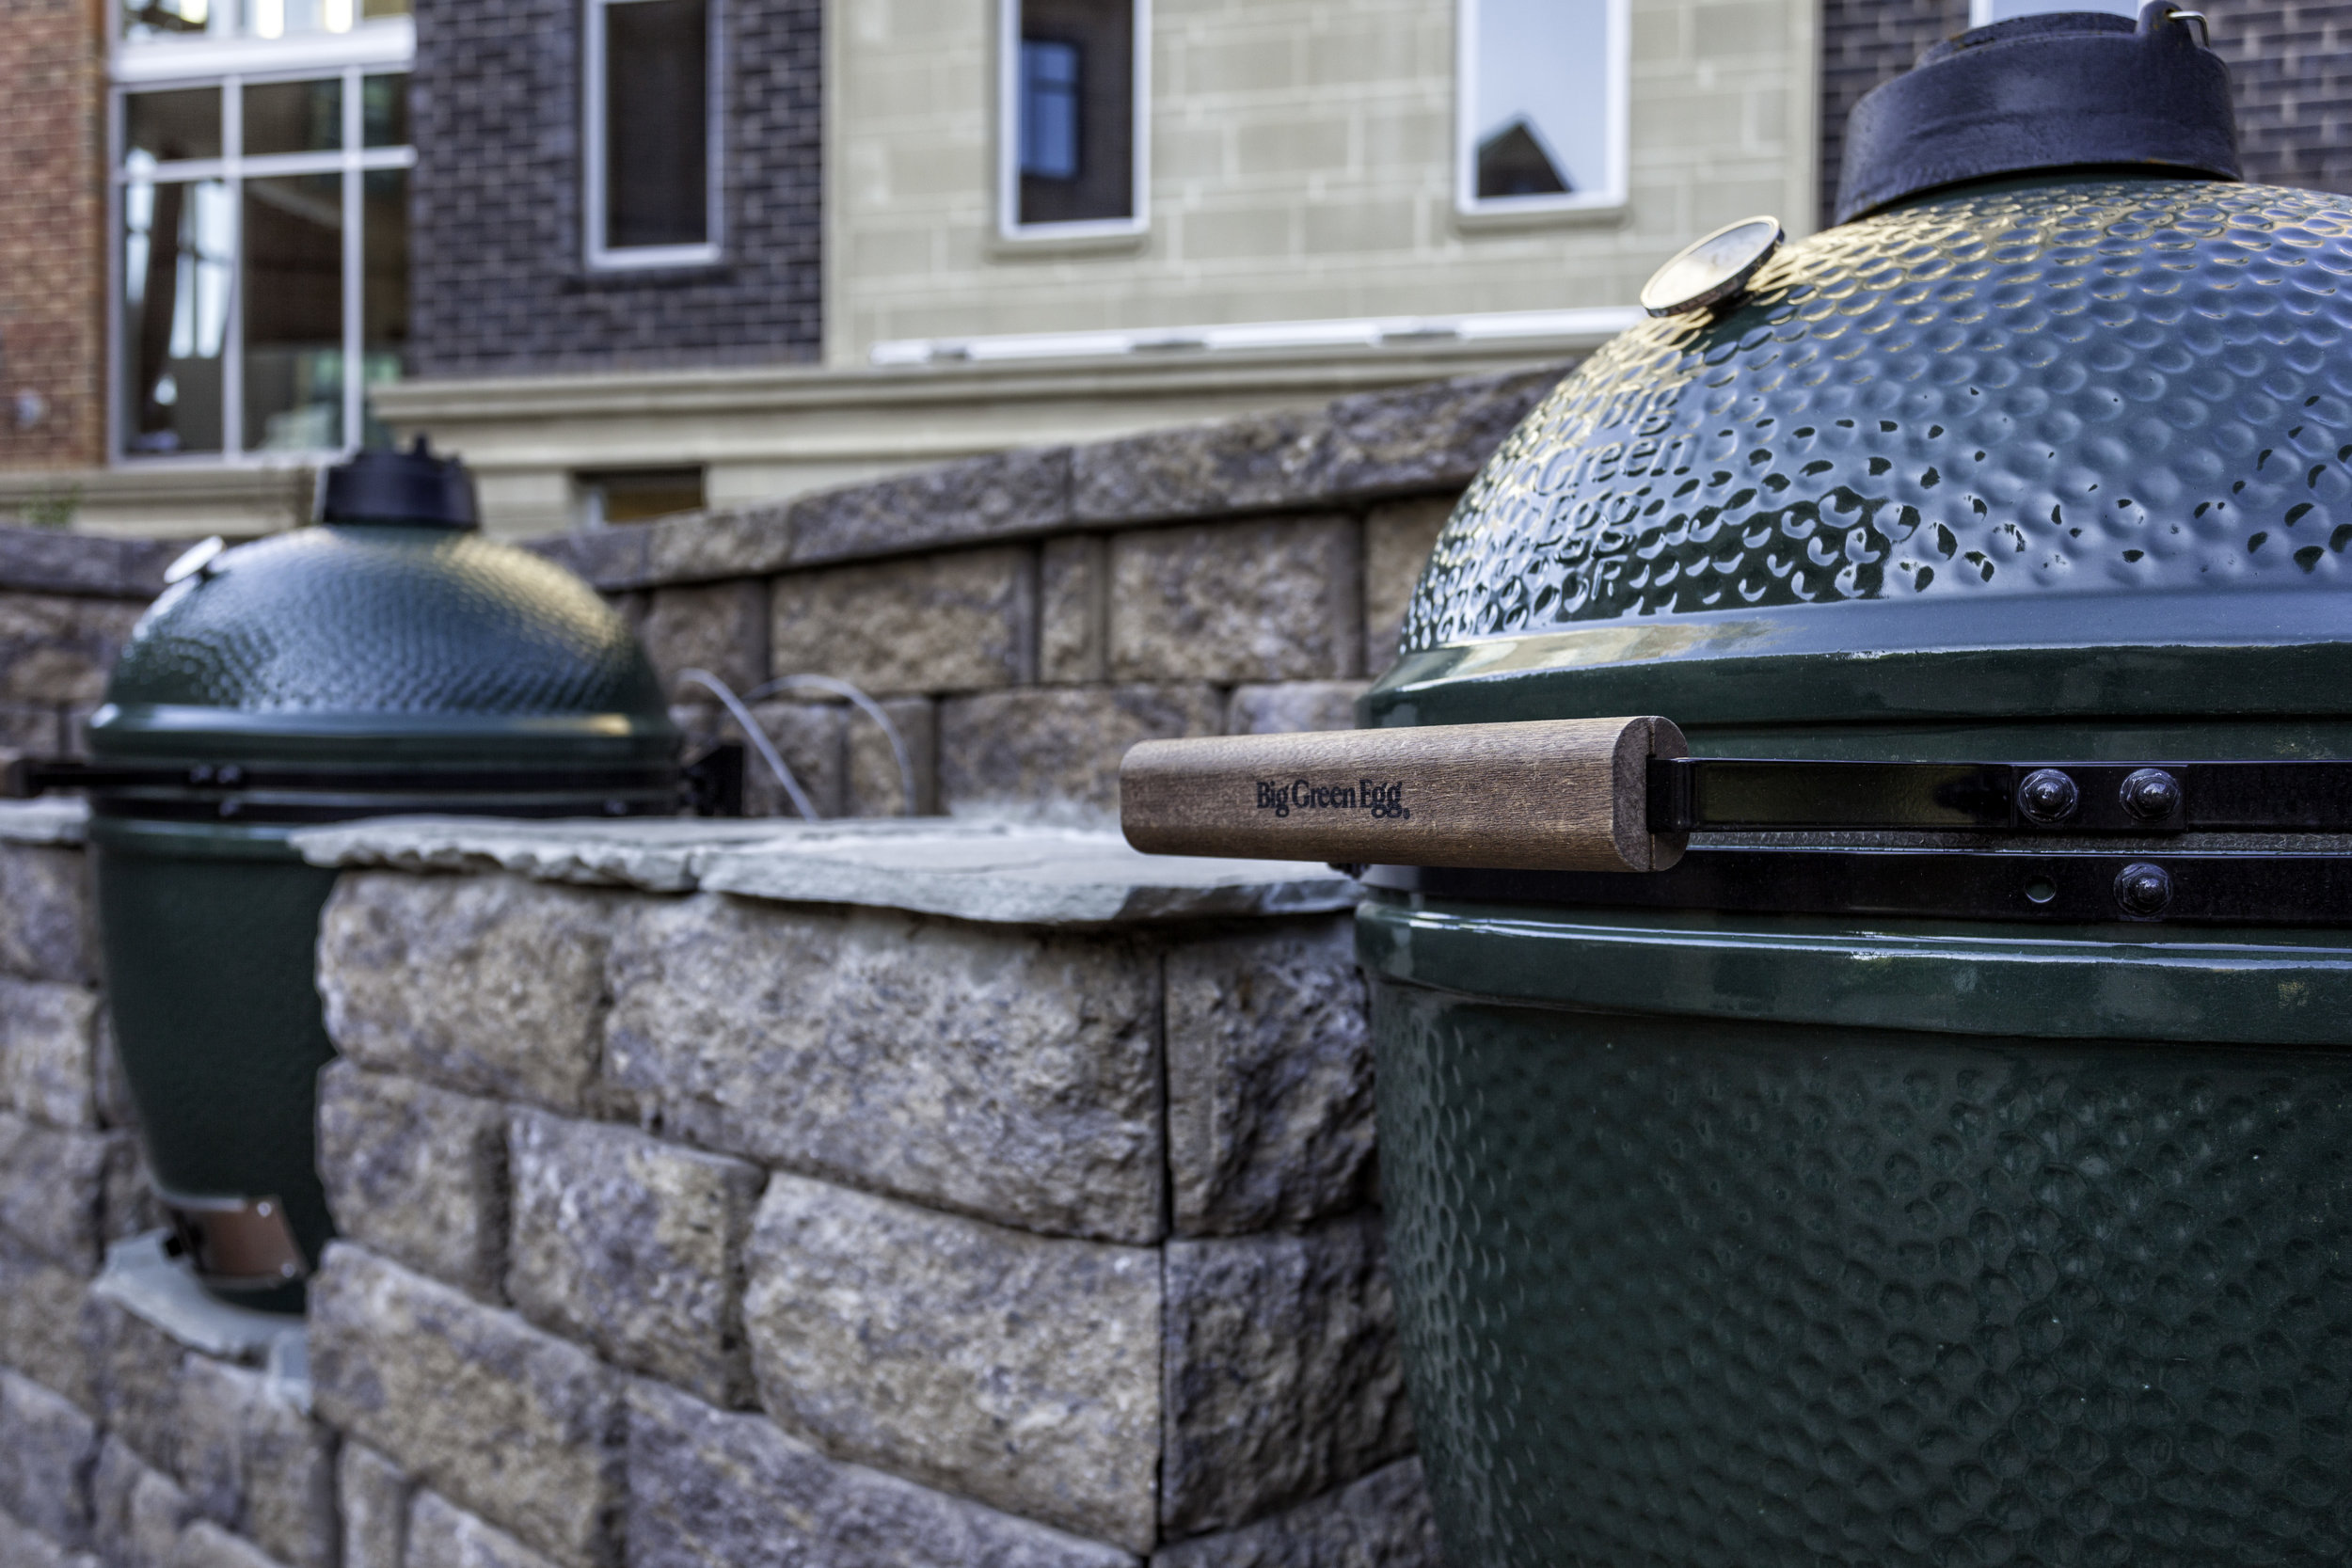 RiversEDGE apartment building - image of outdoor grills